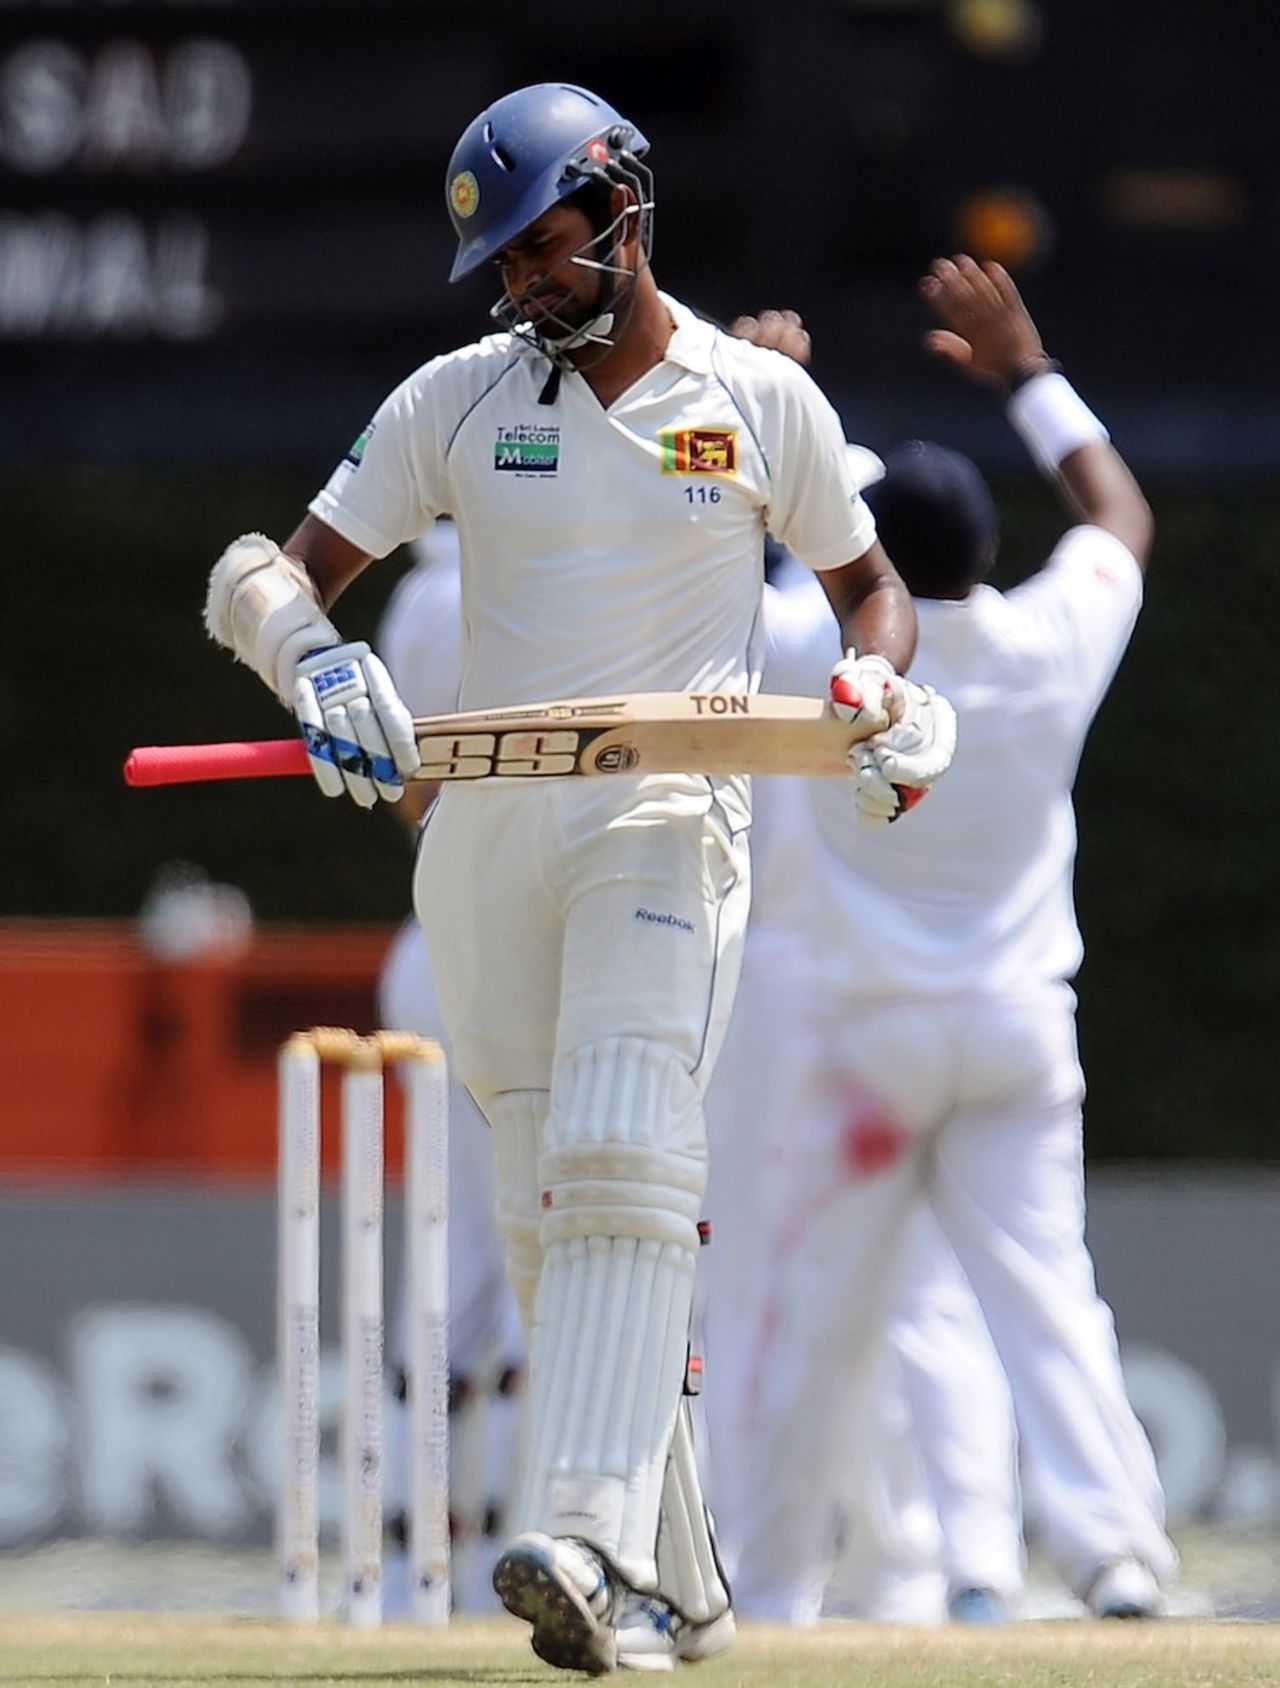 Lahiru Thirimanne was dismissed for 11, Sri Lanka v England, 2nd Test, Colombo, P Sara Oval, 4th day, April 6, 2012